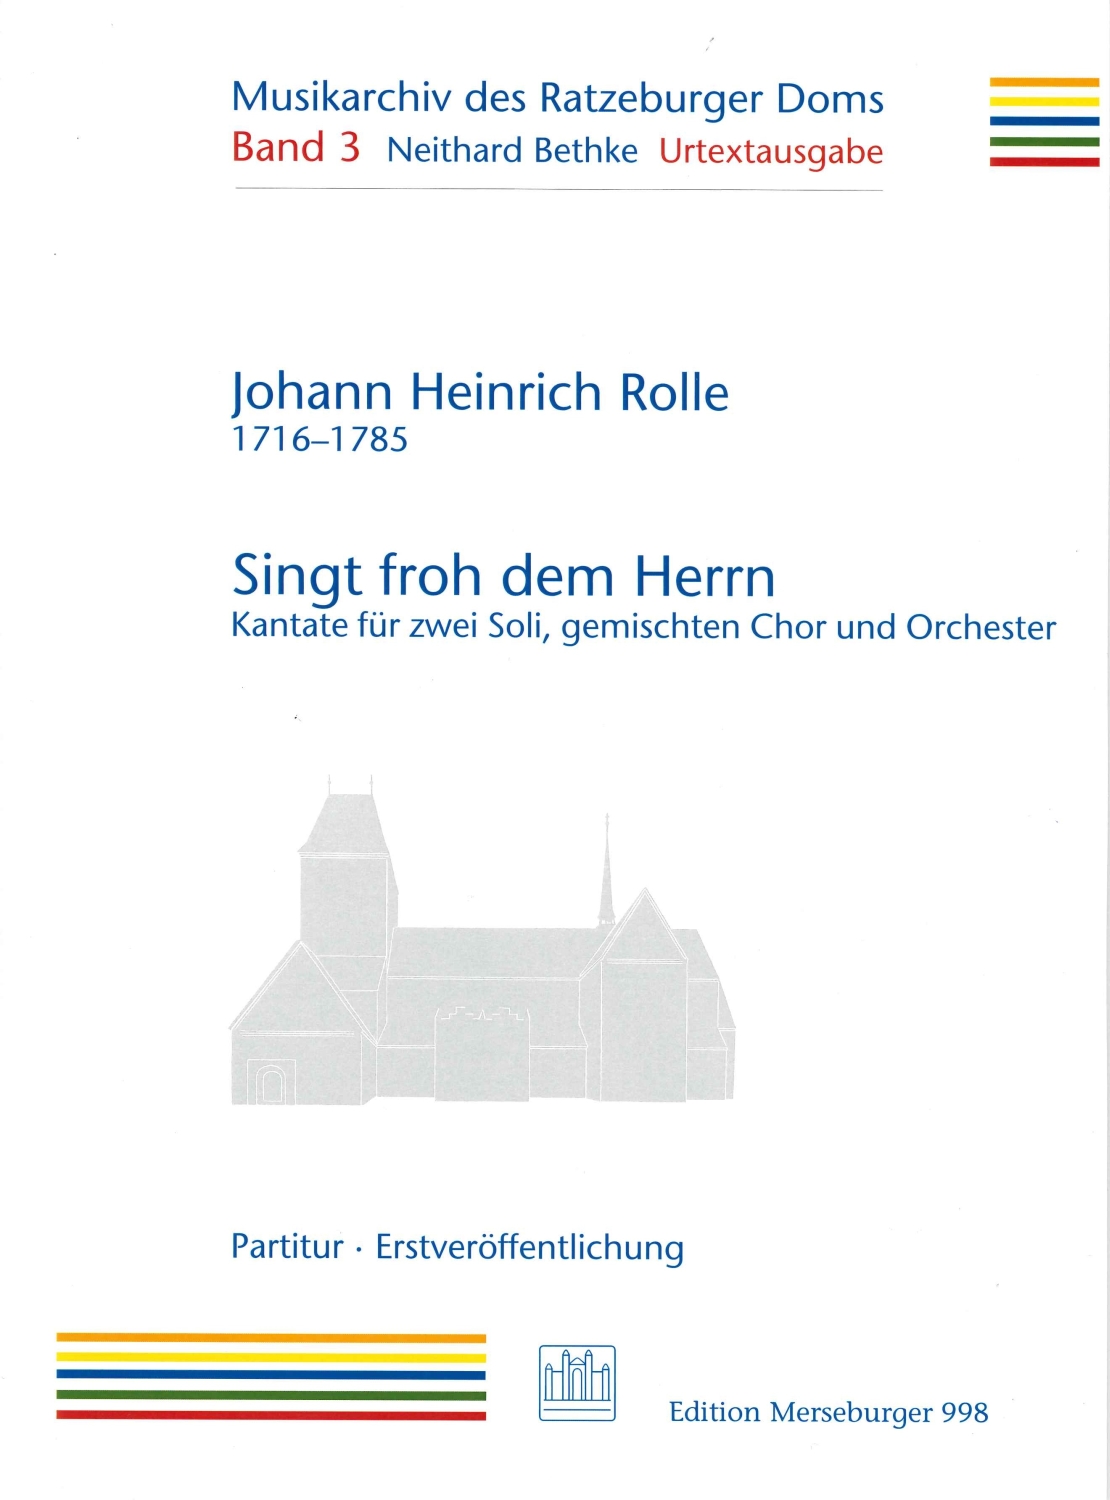 johann-heinrich-rolle-singt-froh-dem-herrn-gch-orc_0001.JPG